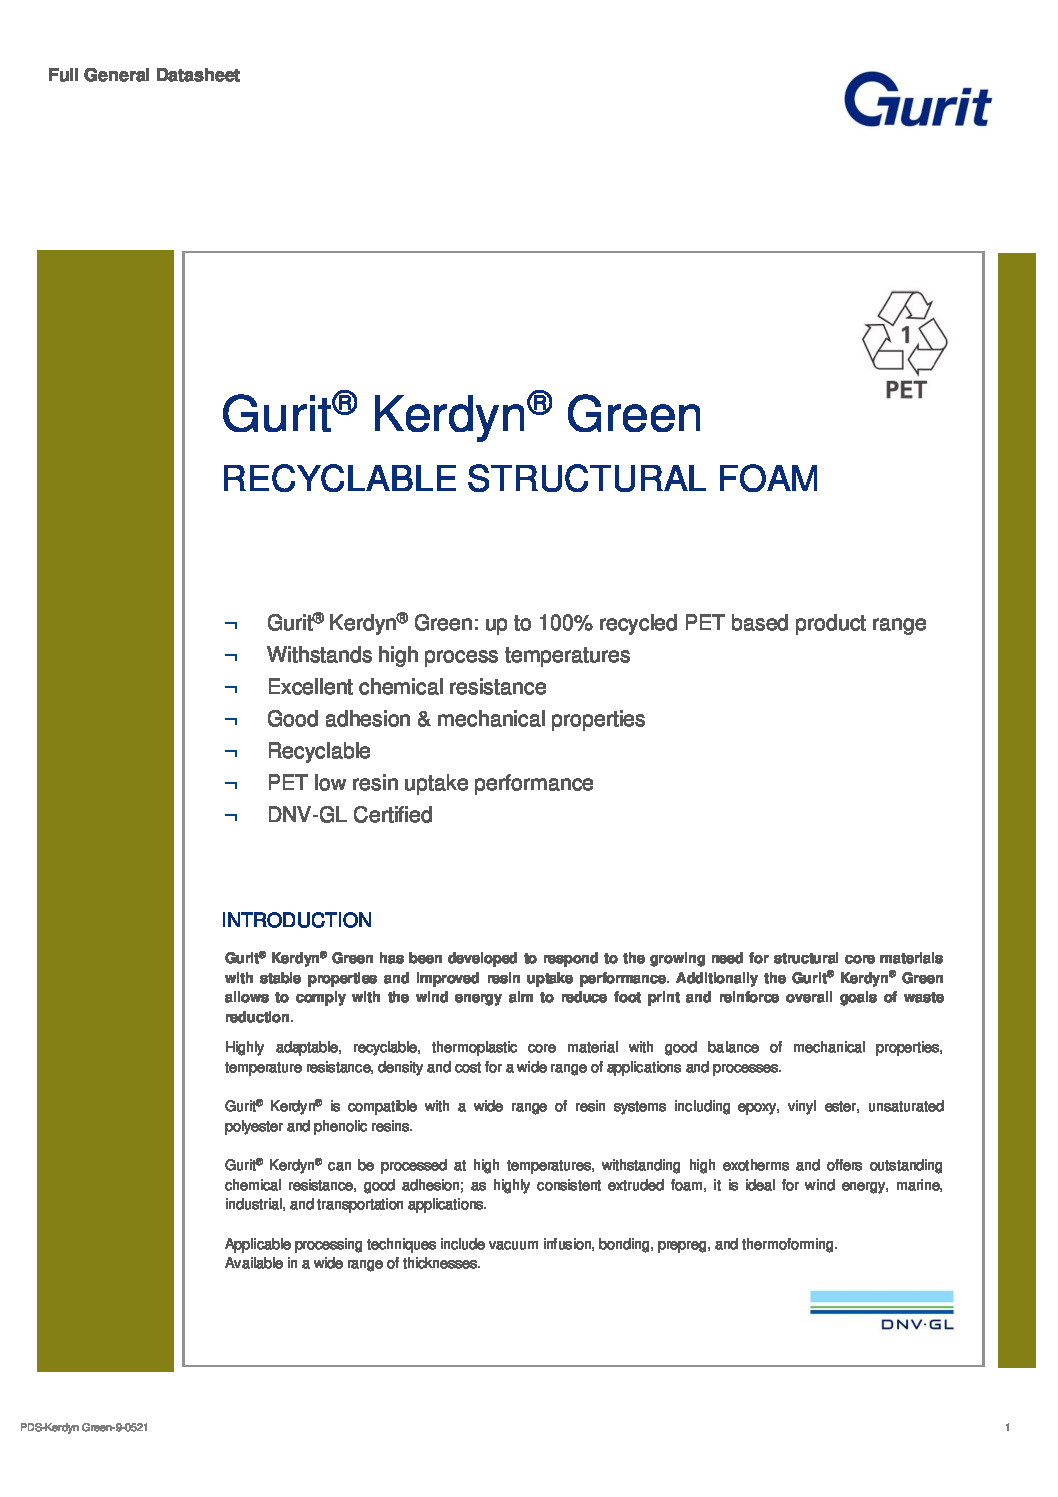 Gurit Kerdyn Green Datasheets